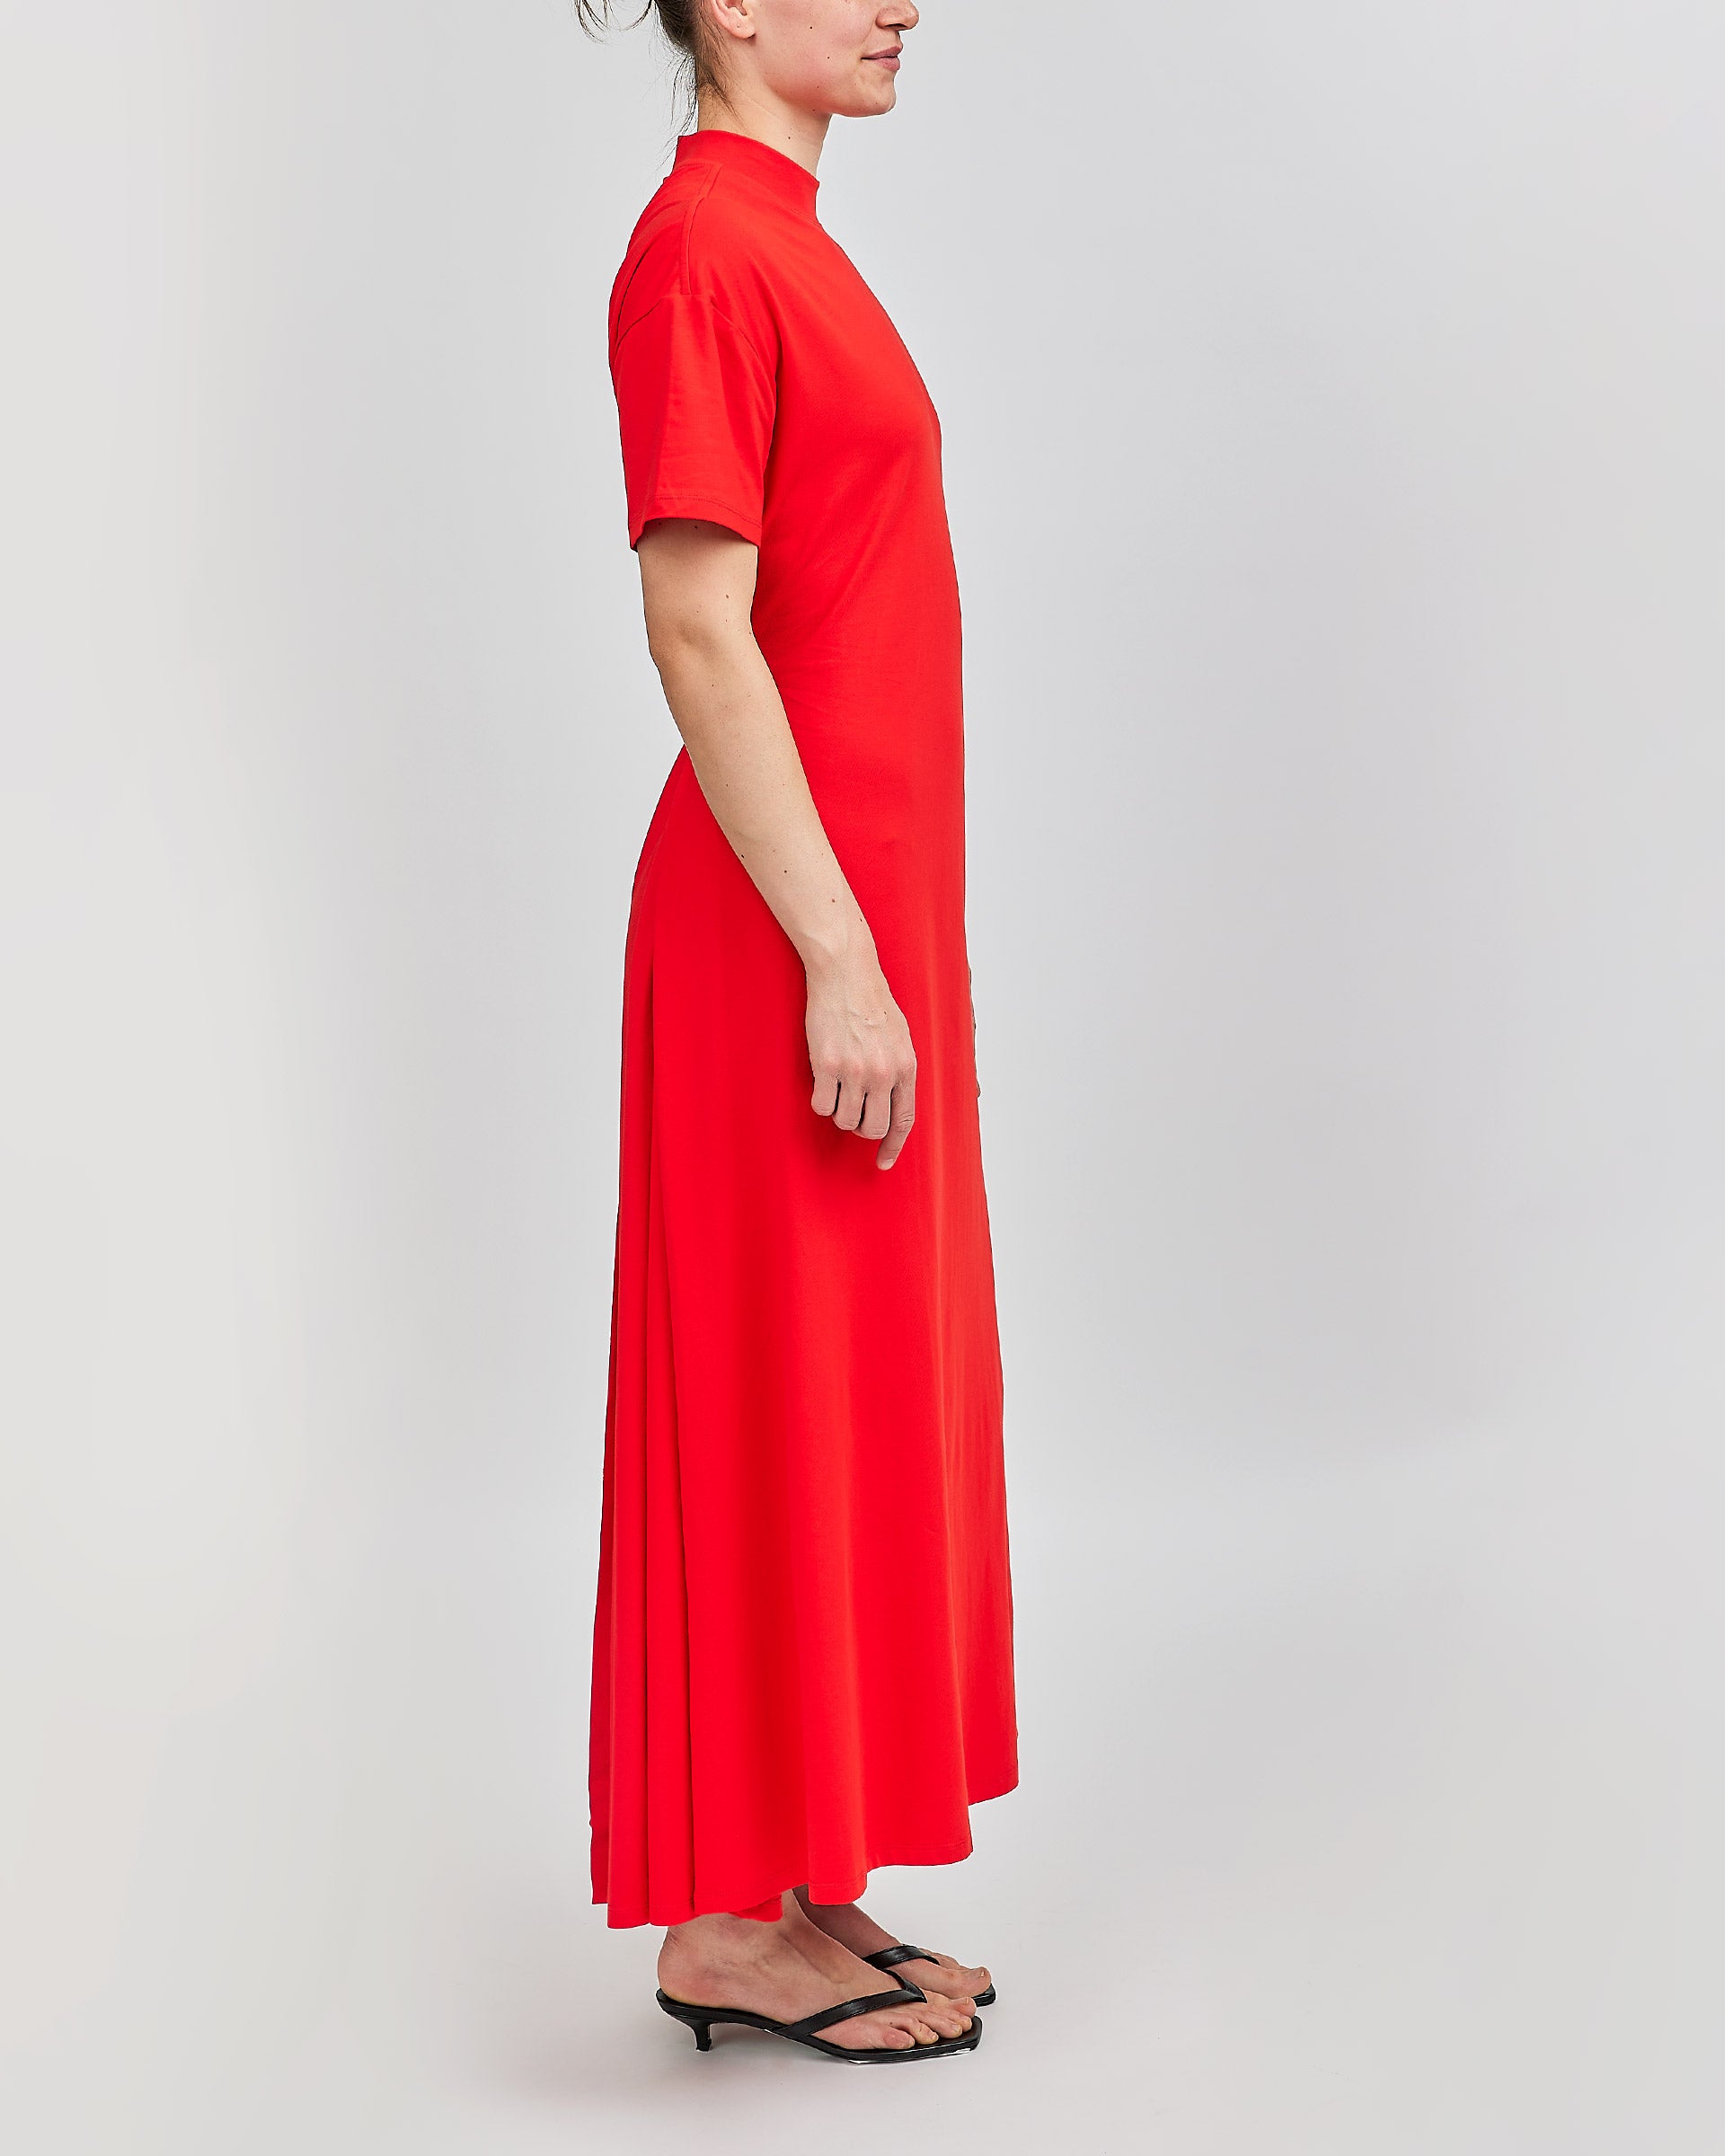 Proenza Schouler White Label Noelle Dress Red